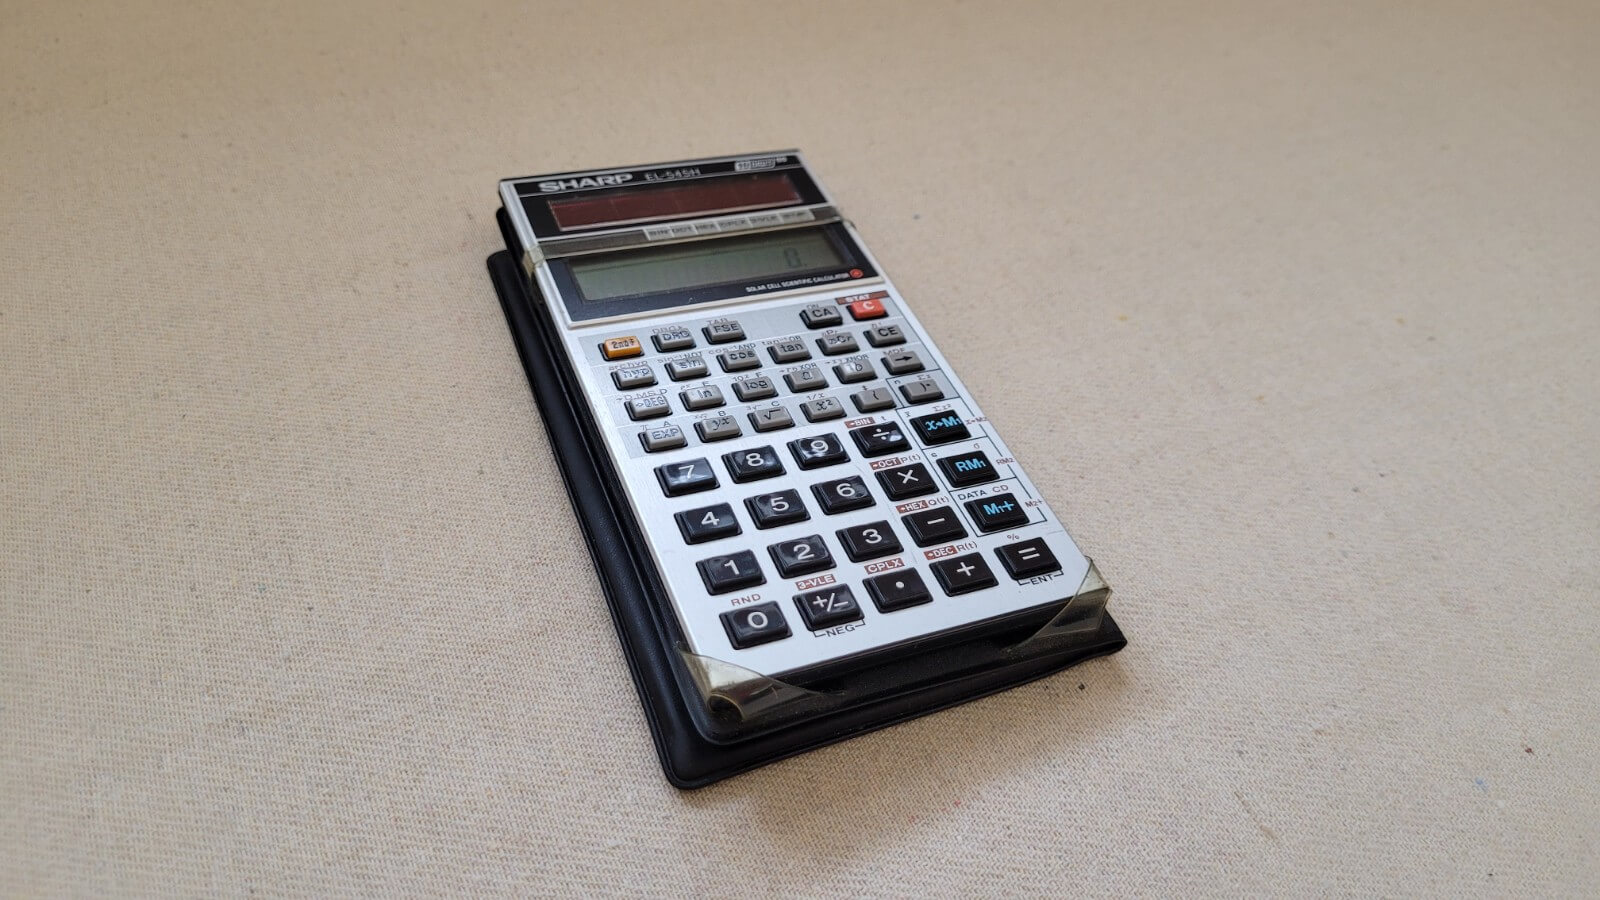 1980s Sharp EL-545H Solar Scientific Calculator 10 Digits w Case Japan